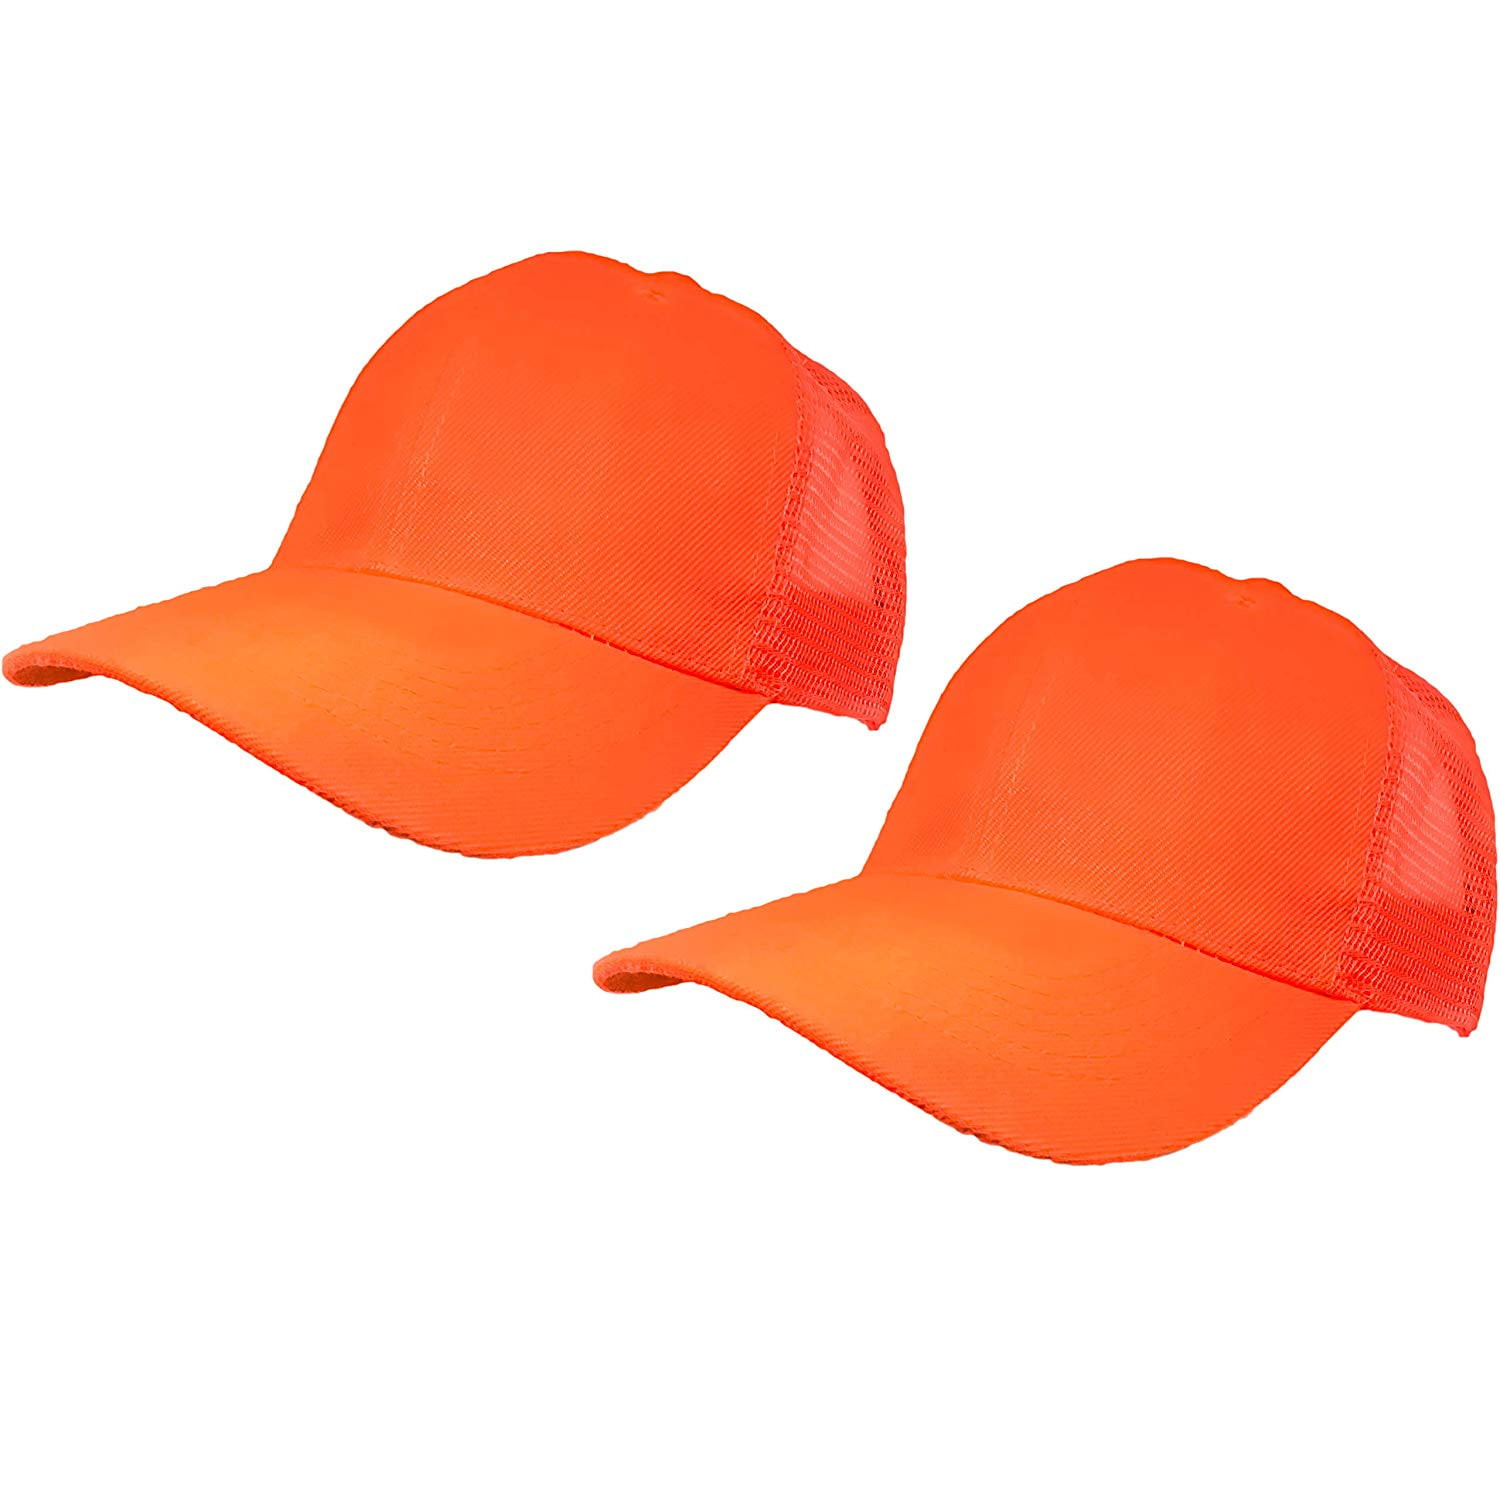 Black Duck Brand Bright Orange Visual Cap Safety Adjustable Mesh Hunting Baseball Hat) Back (1